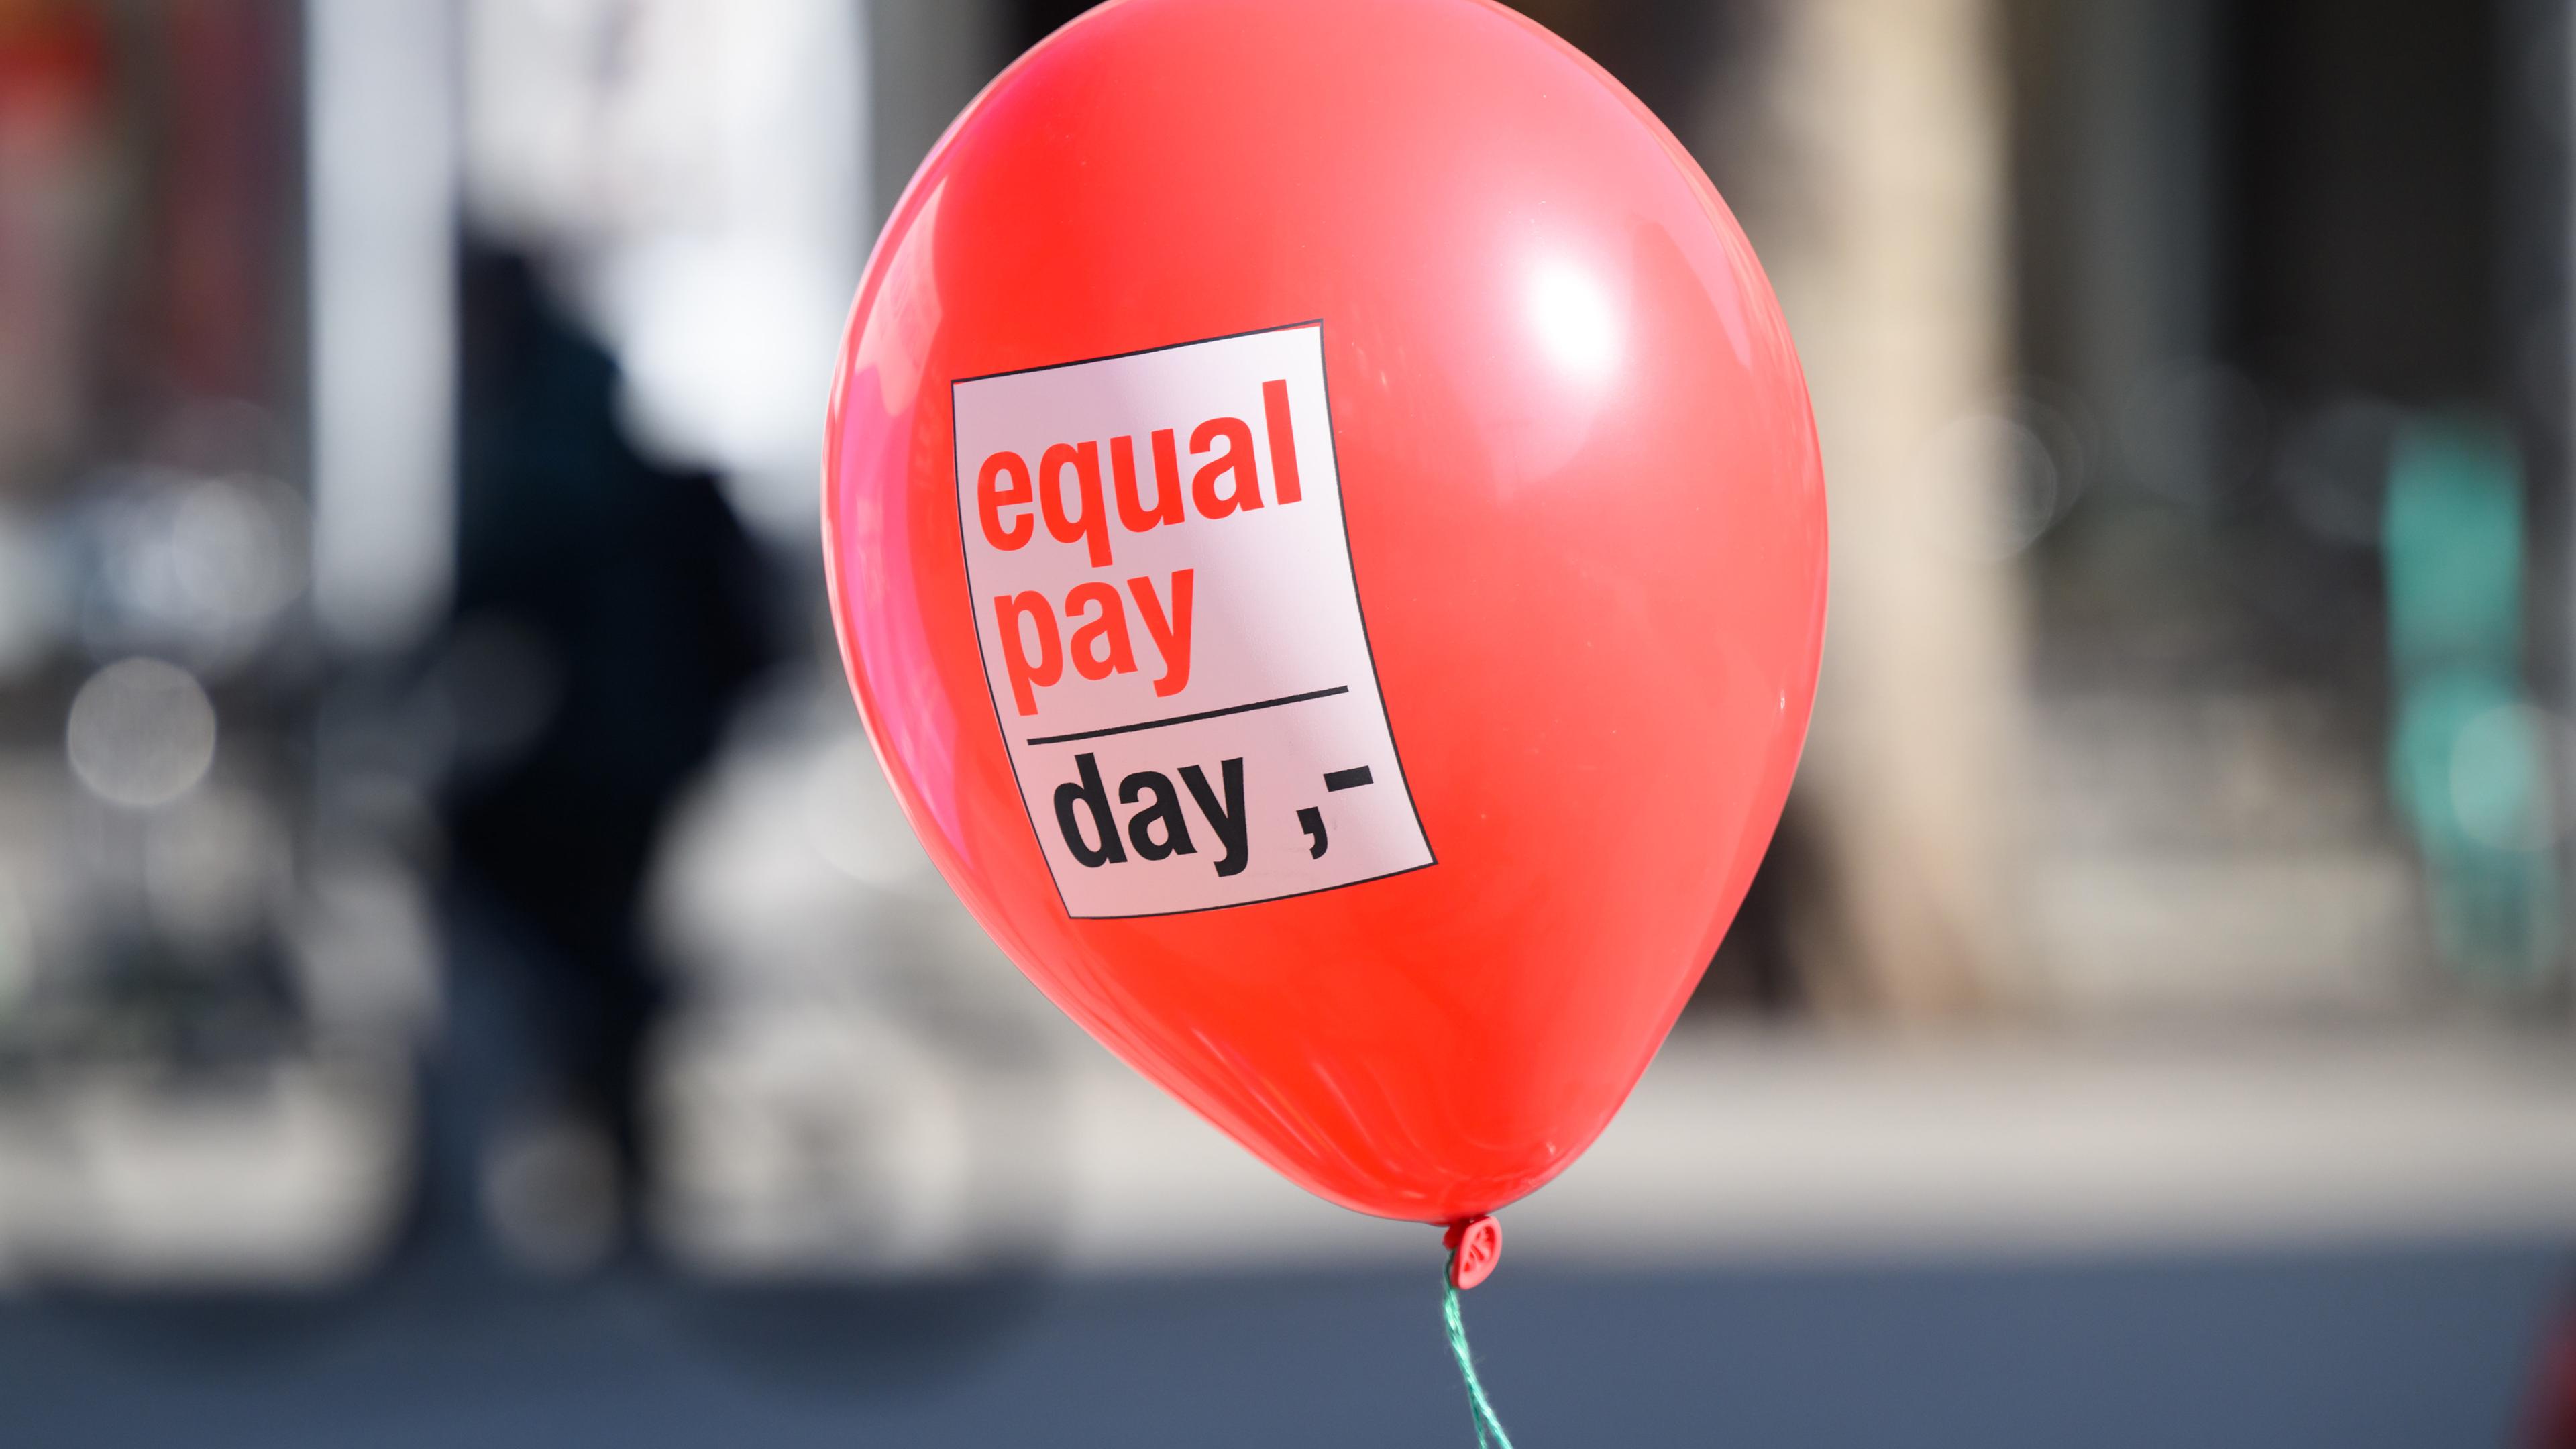 Luftballon mit Aufschrift "equal pay day"